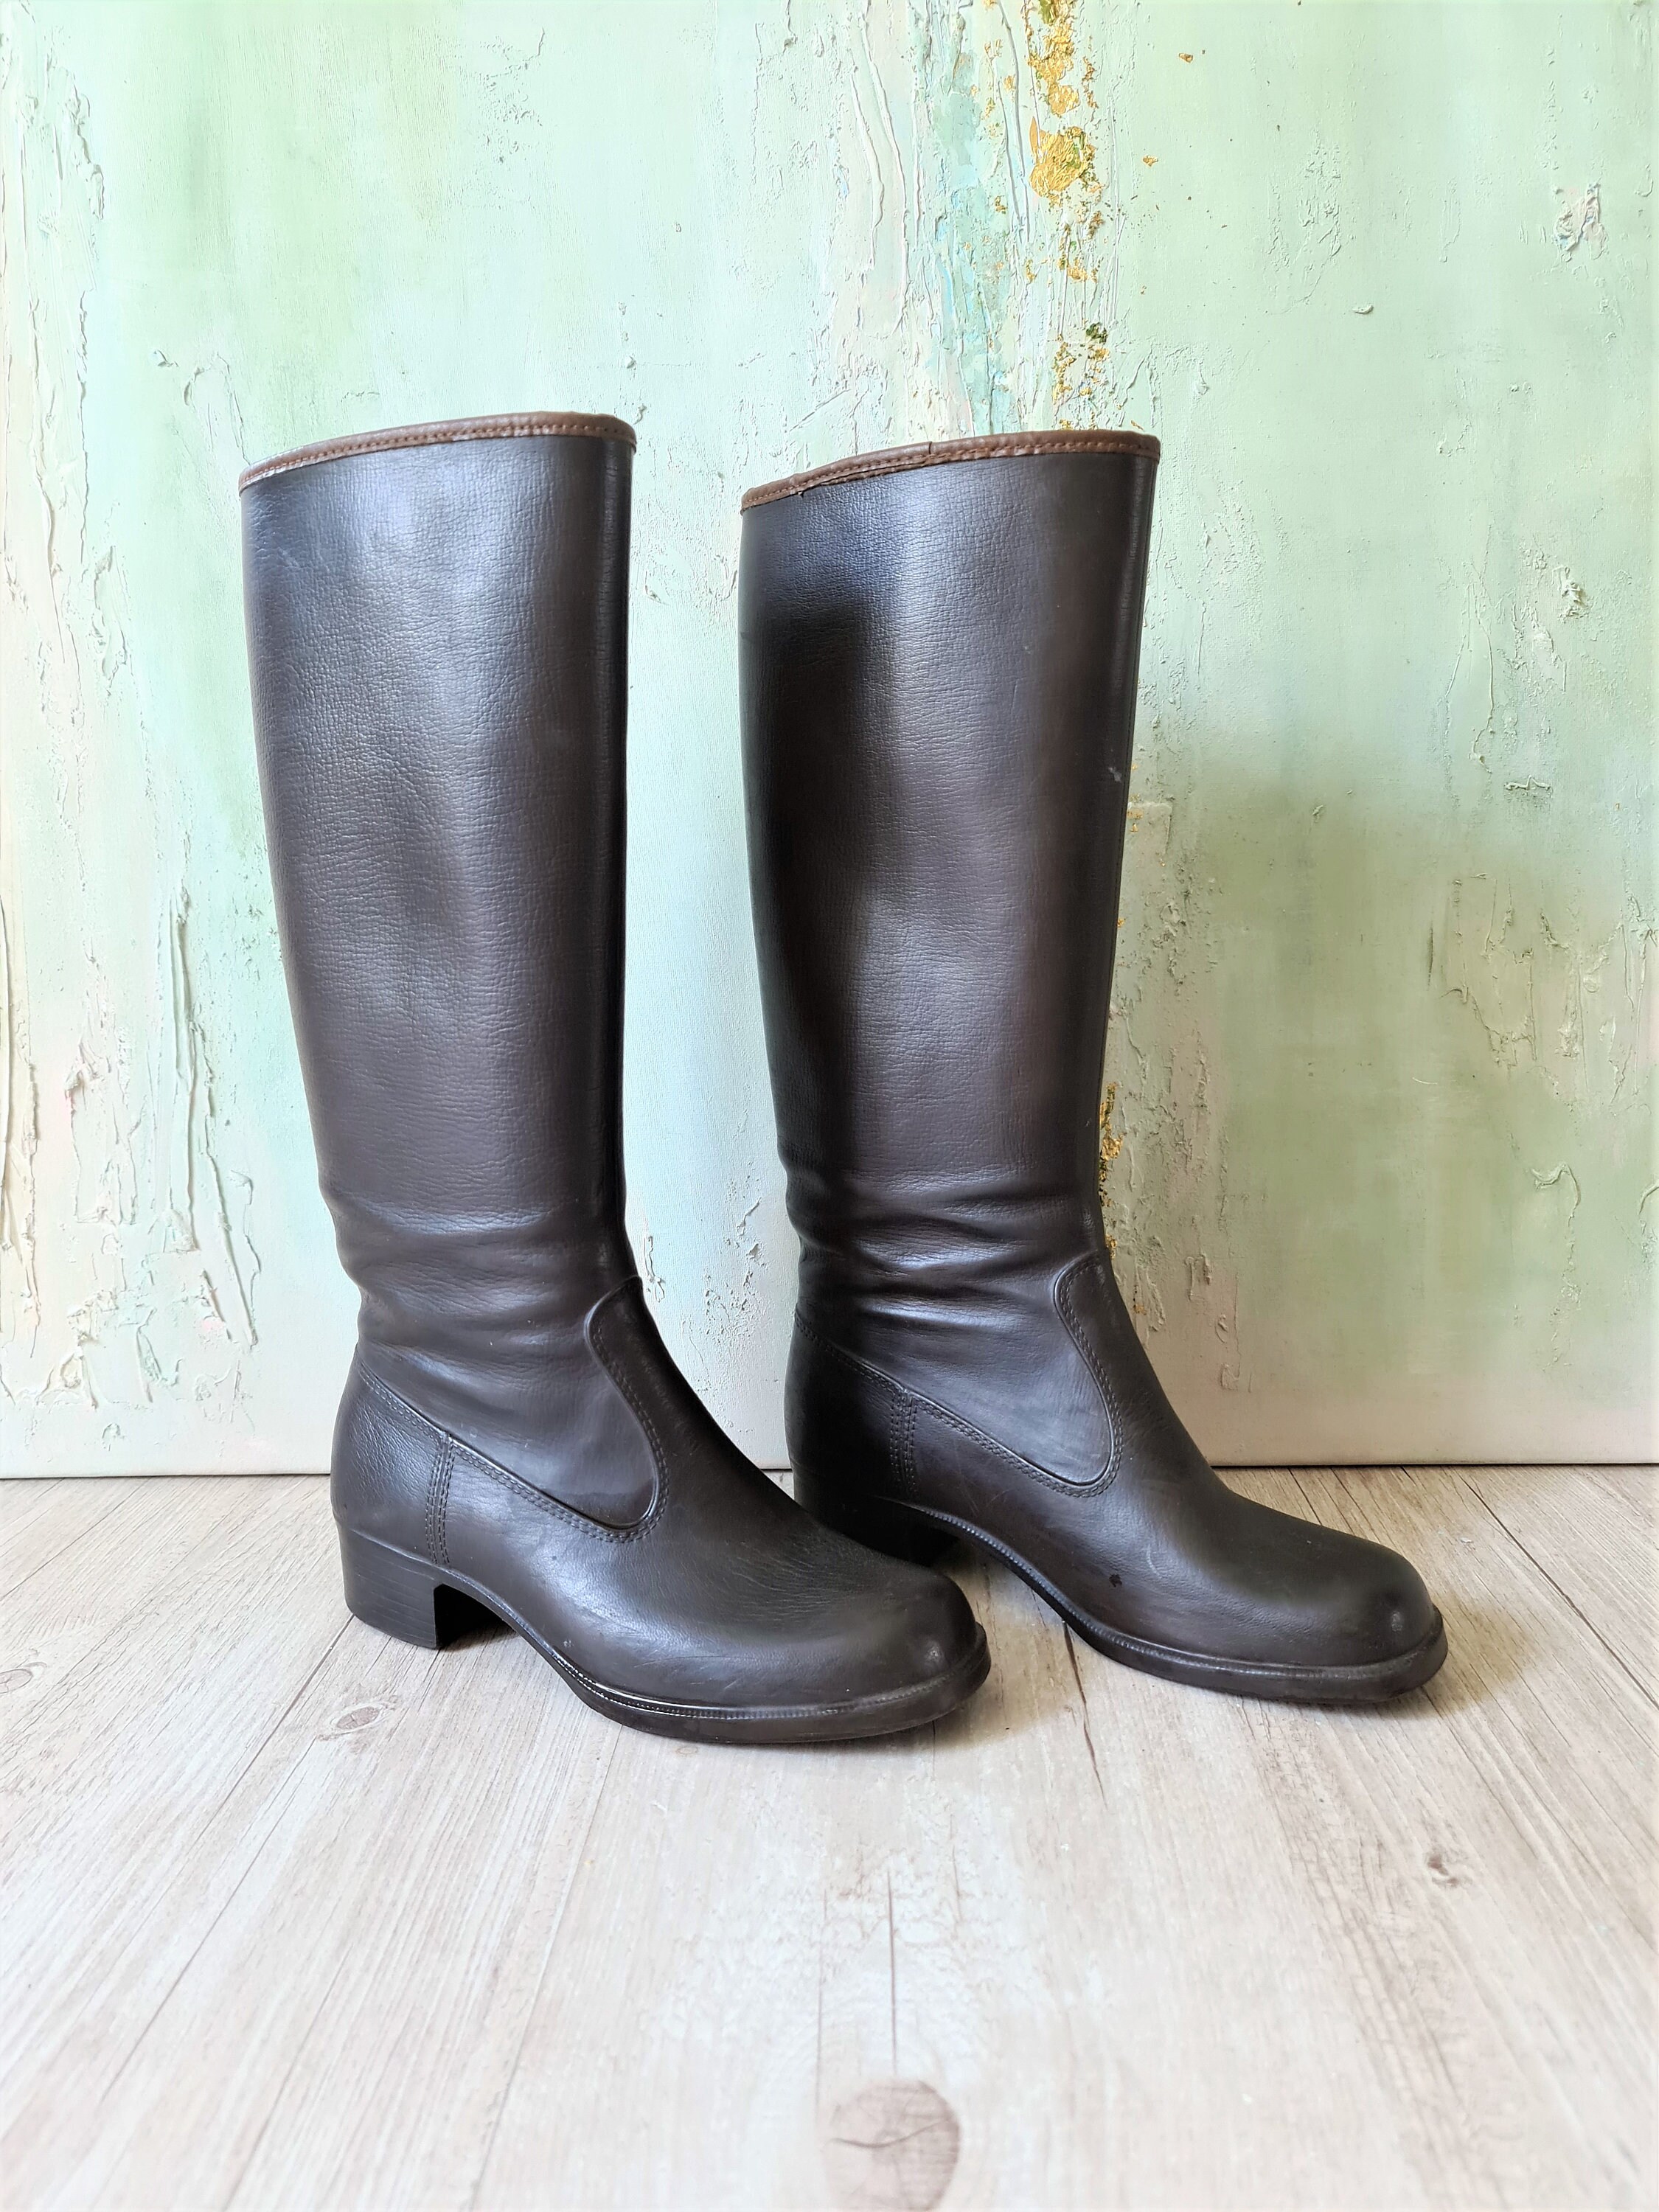 Tretorn Boots Womens Tall Brown Waterproof Rain Boots Size EU - Etsy